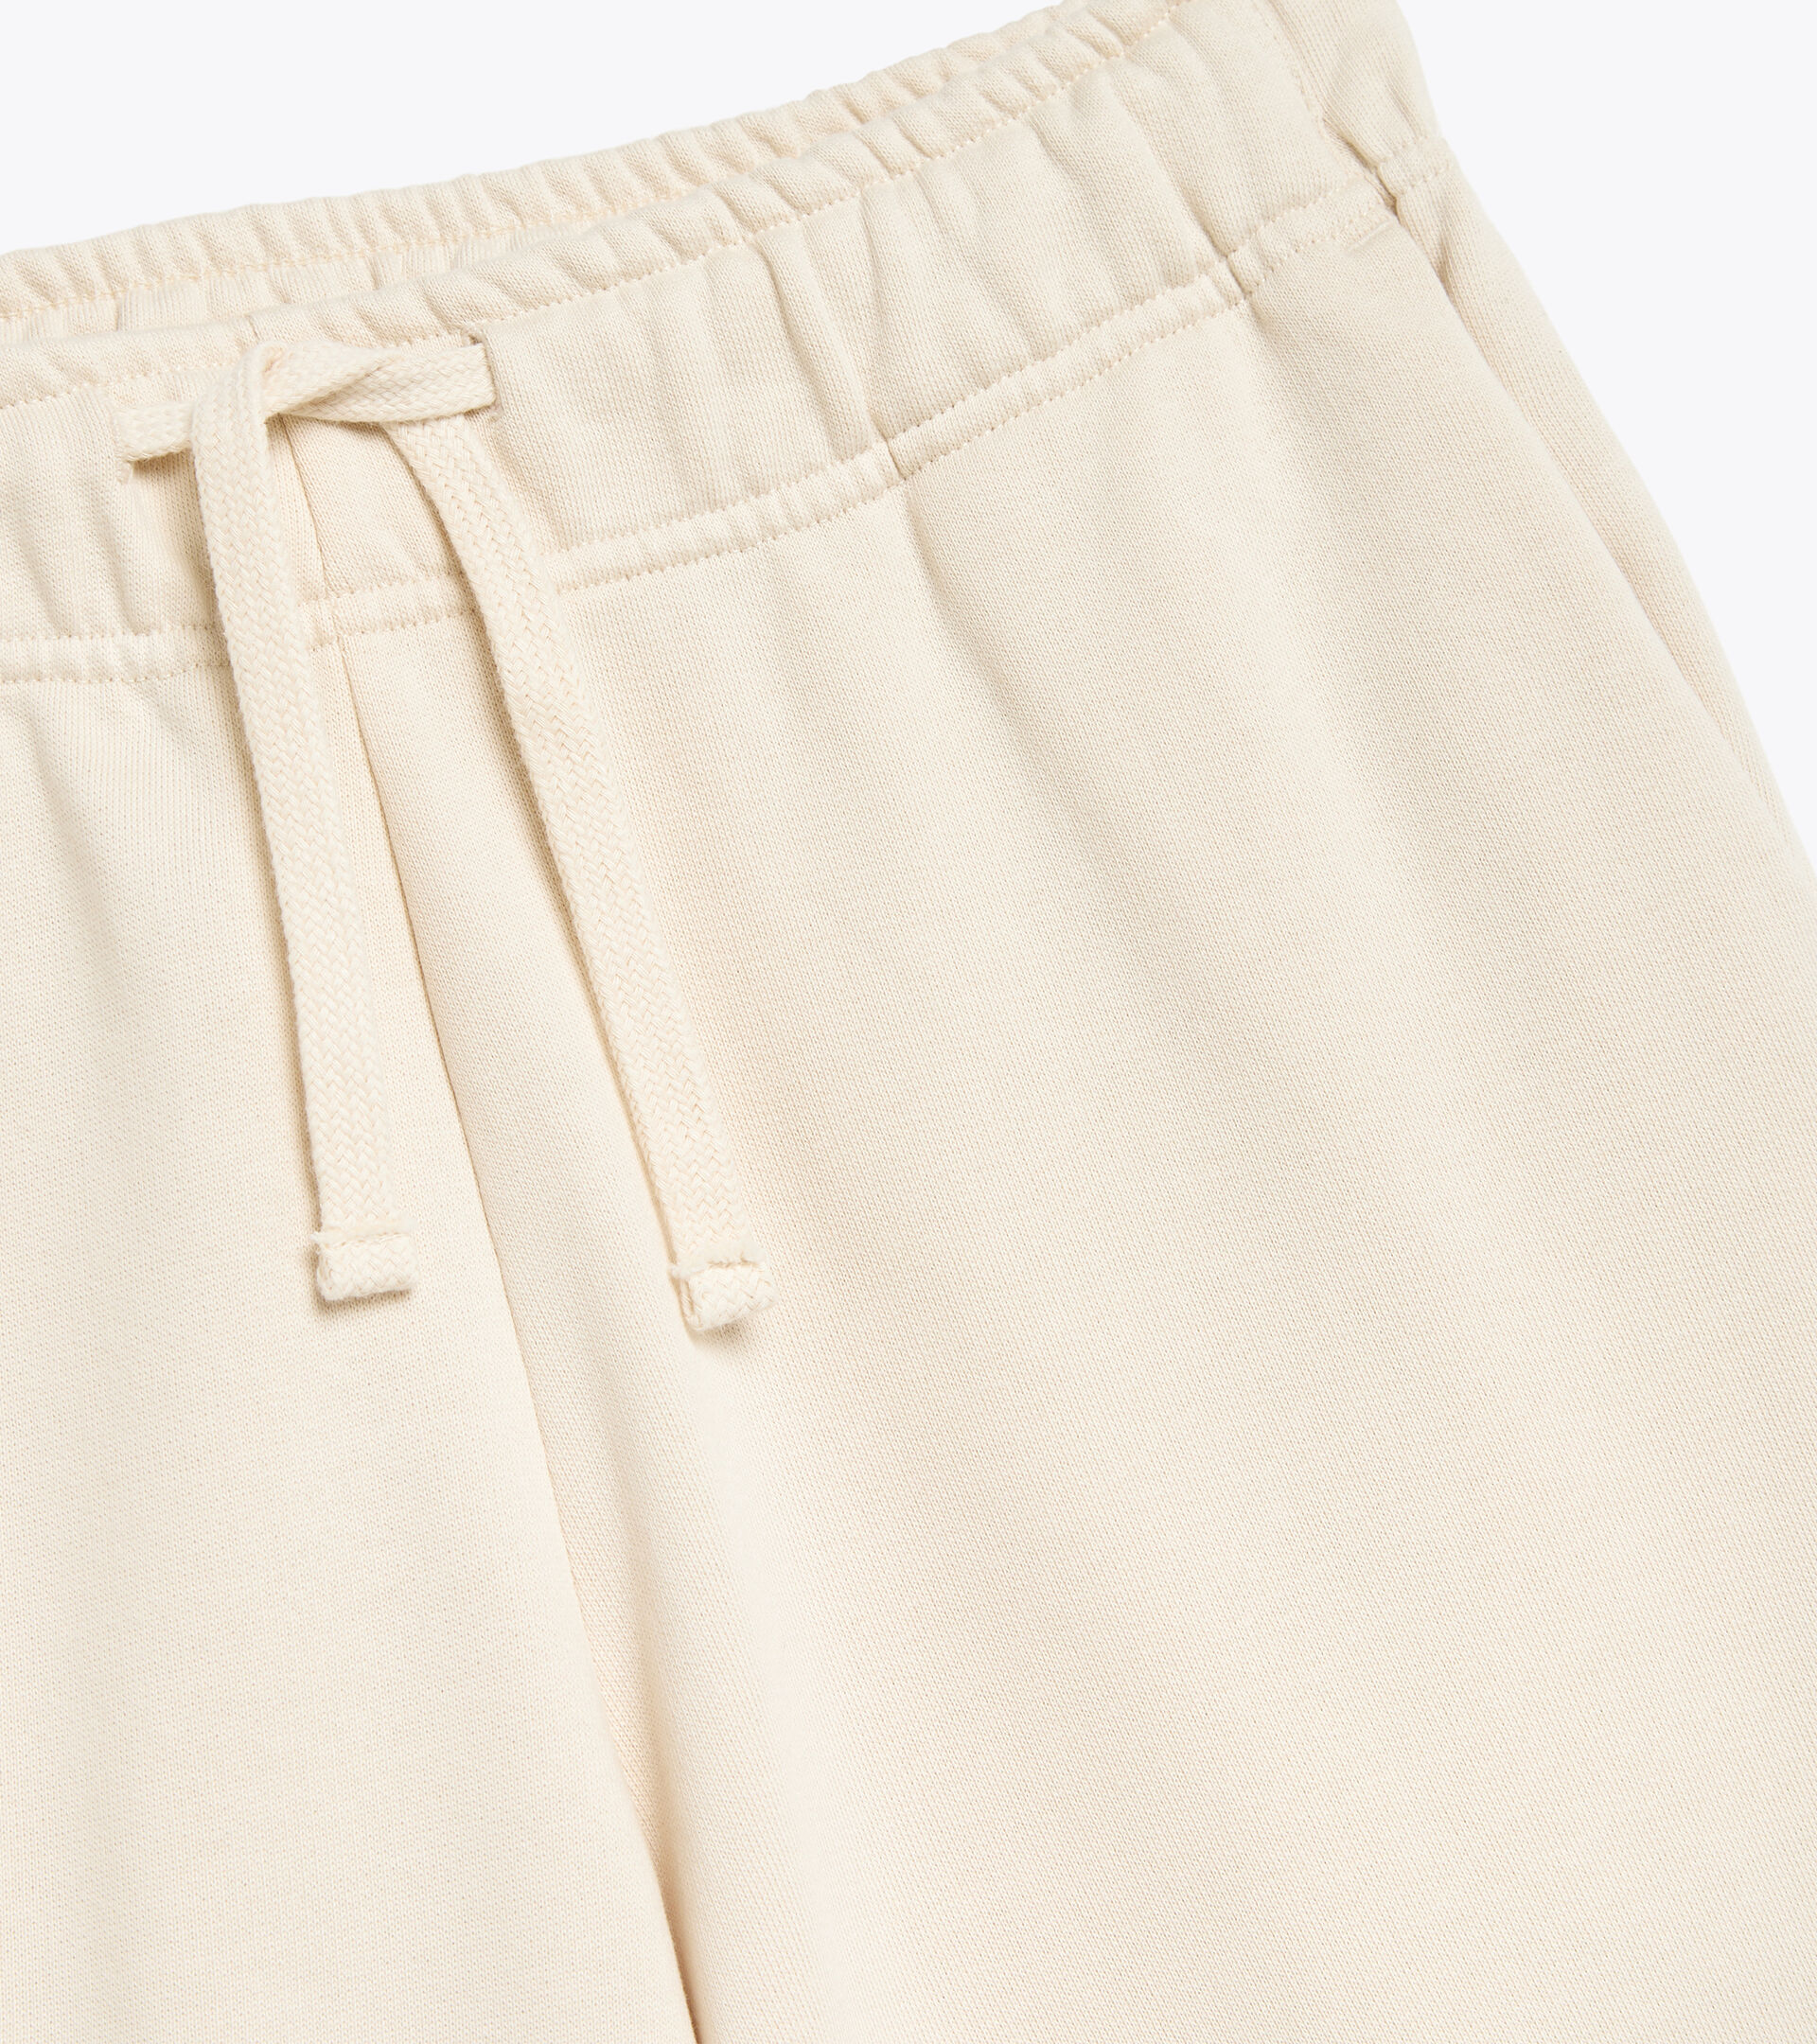 Cotton sweatpants - Gender neutral BERMUDA SPW LOGO WHITE SWAN - Diadora